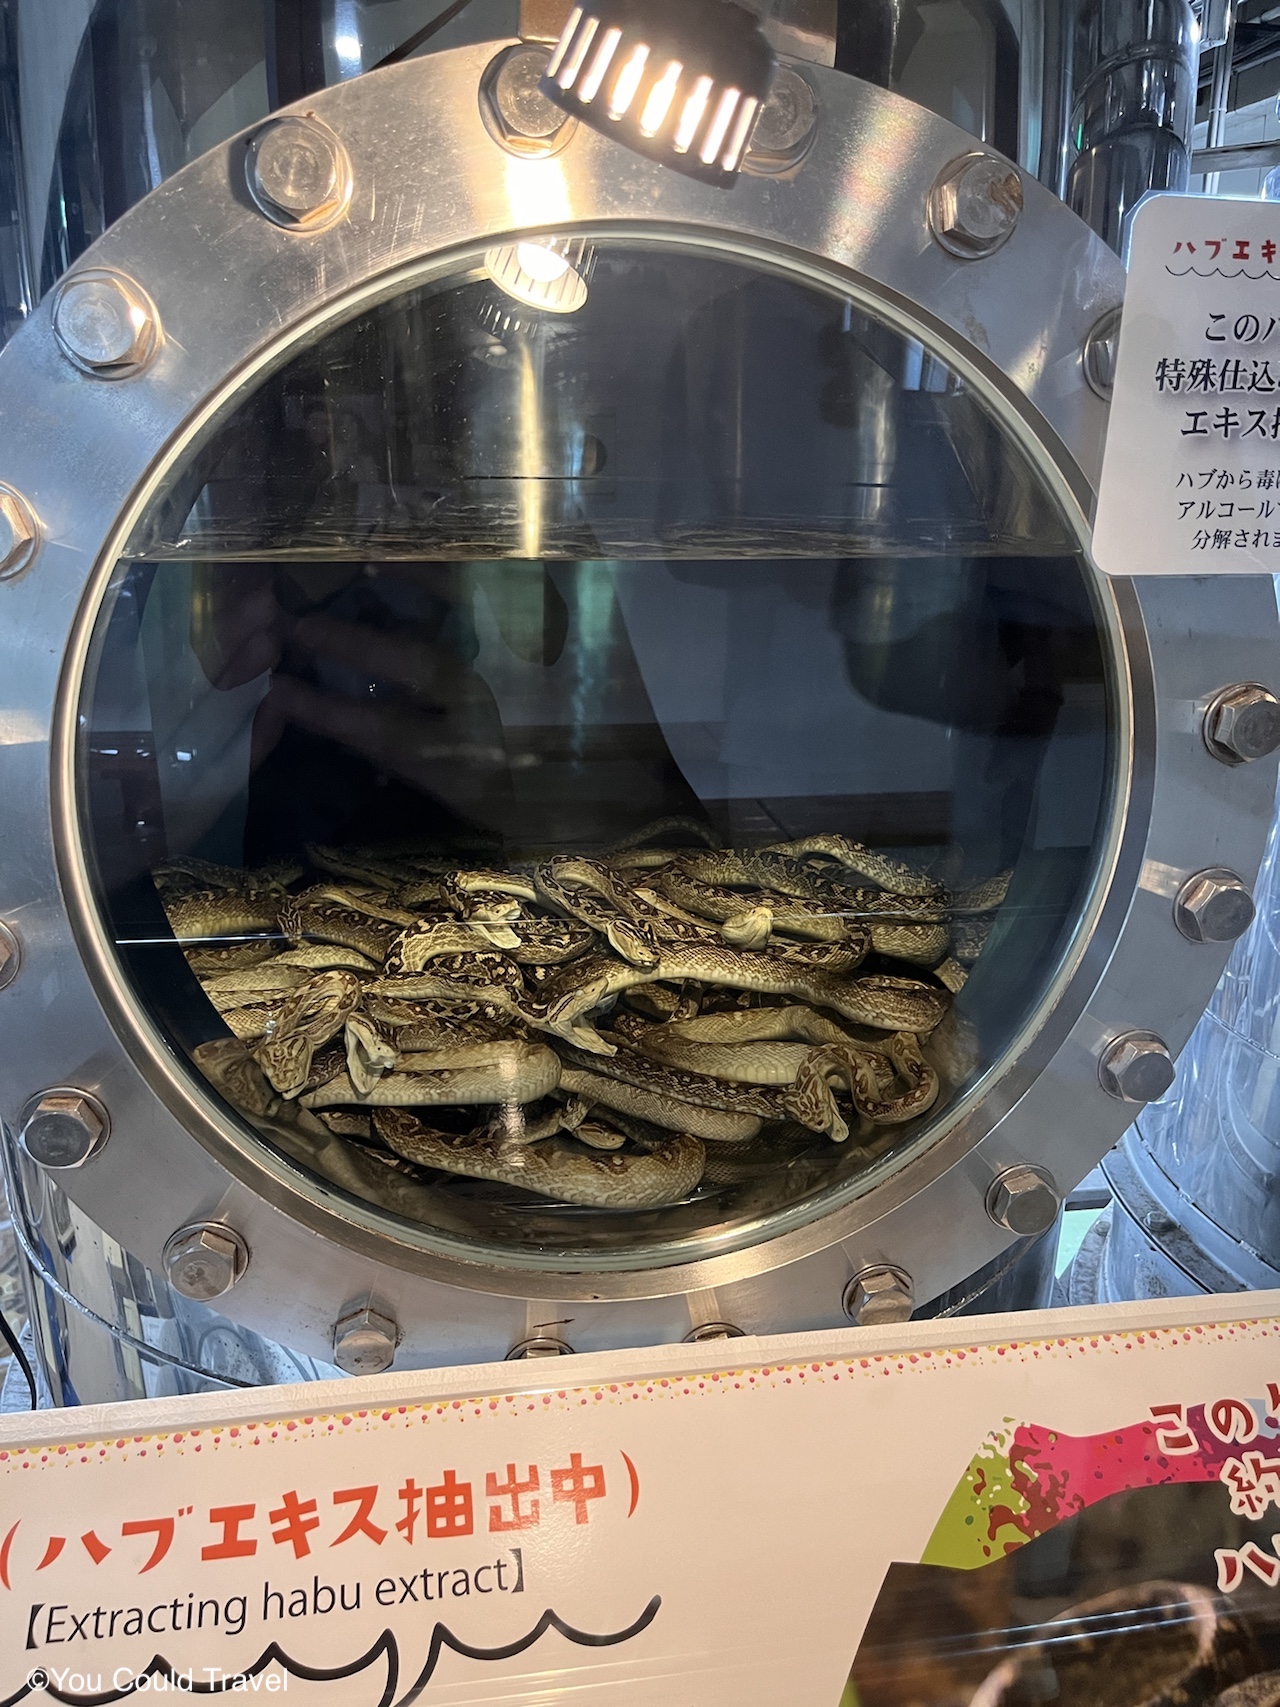 Habu snakes at Okinawa World